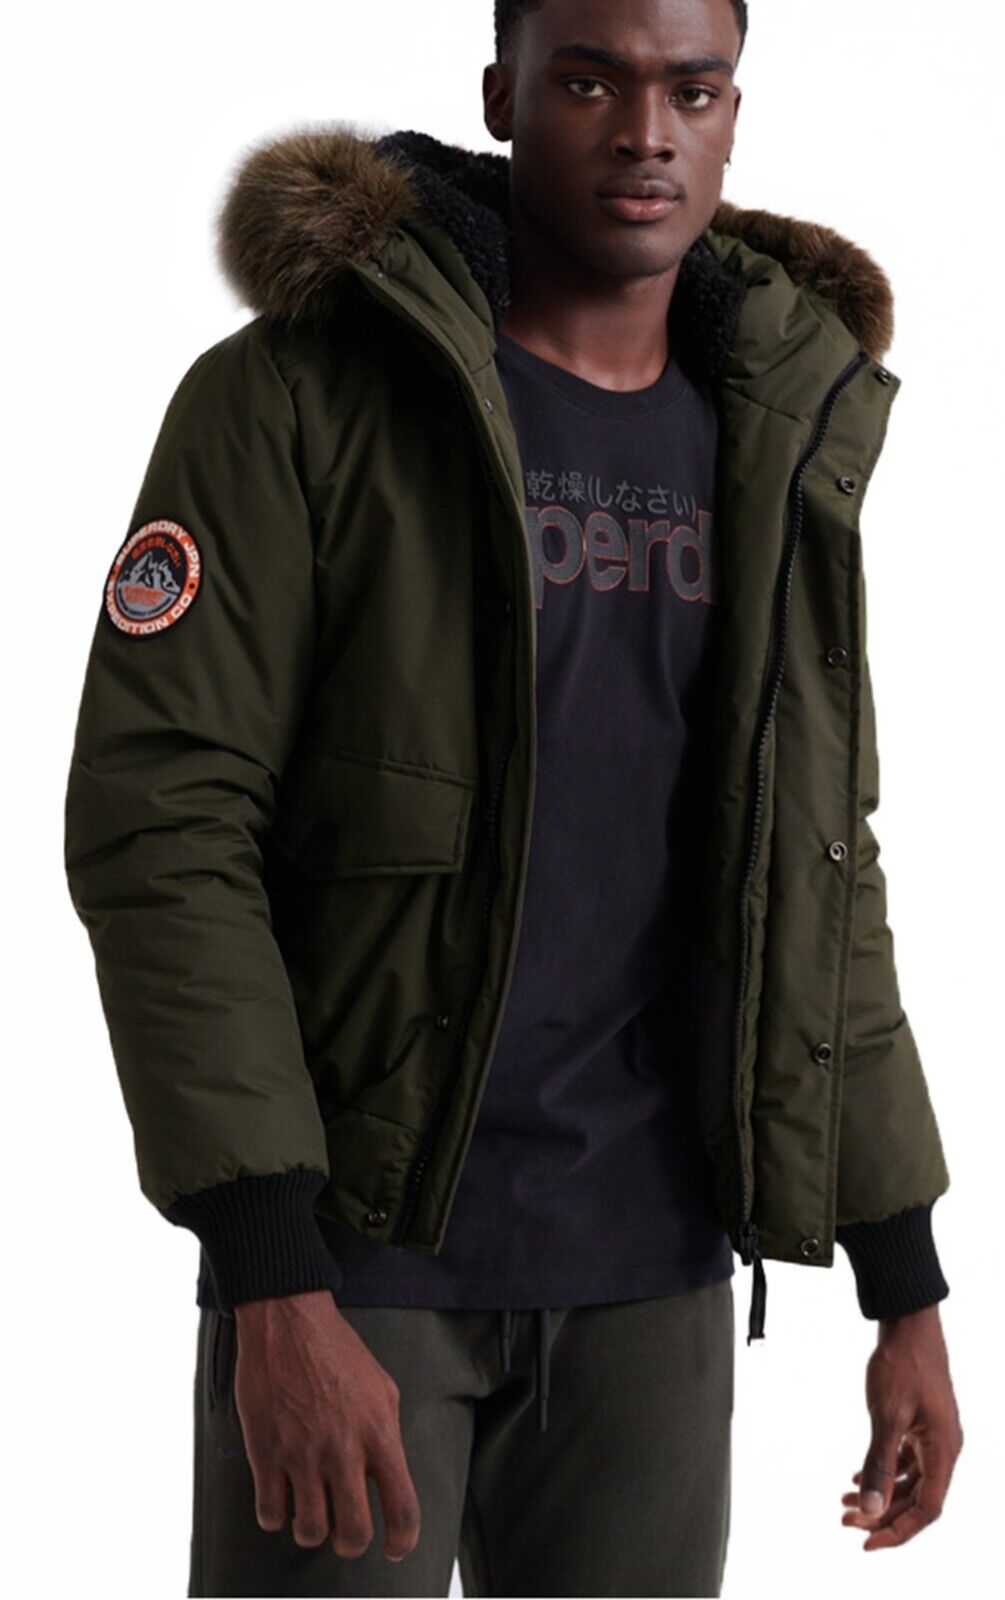 ritme gezond verstand Grens Superdry Faux Fur Parka Jacket Warm Short Hooded Padded Winter Coat Khaki  Green | eBay